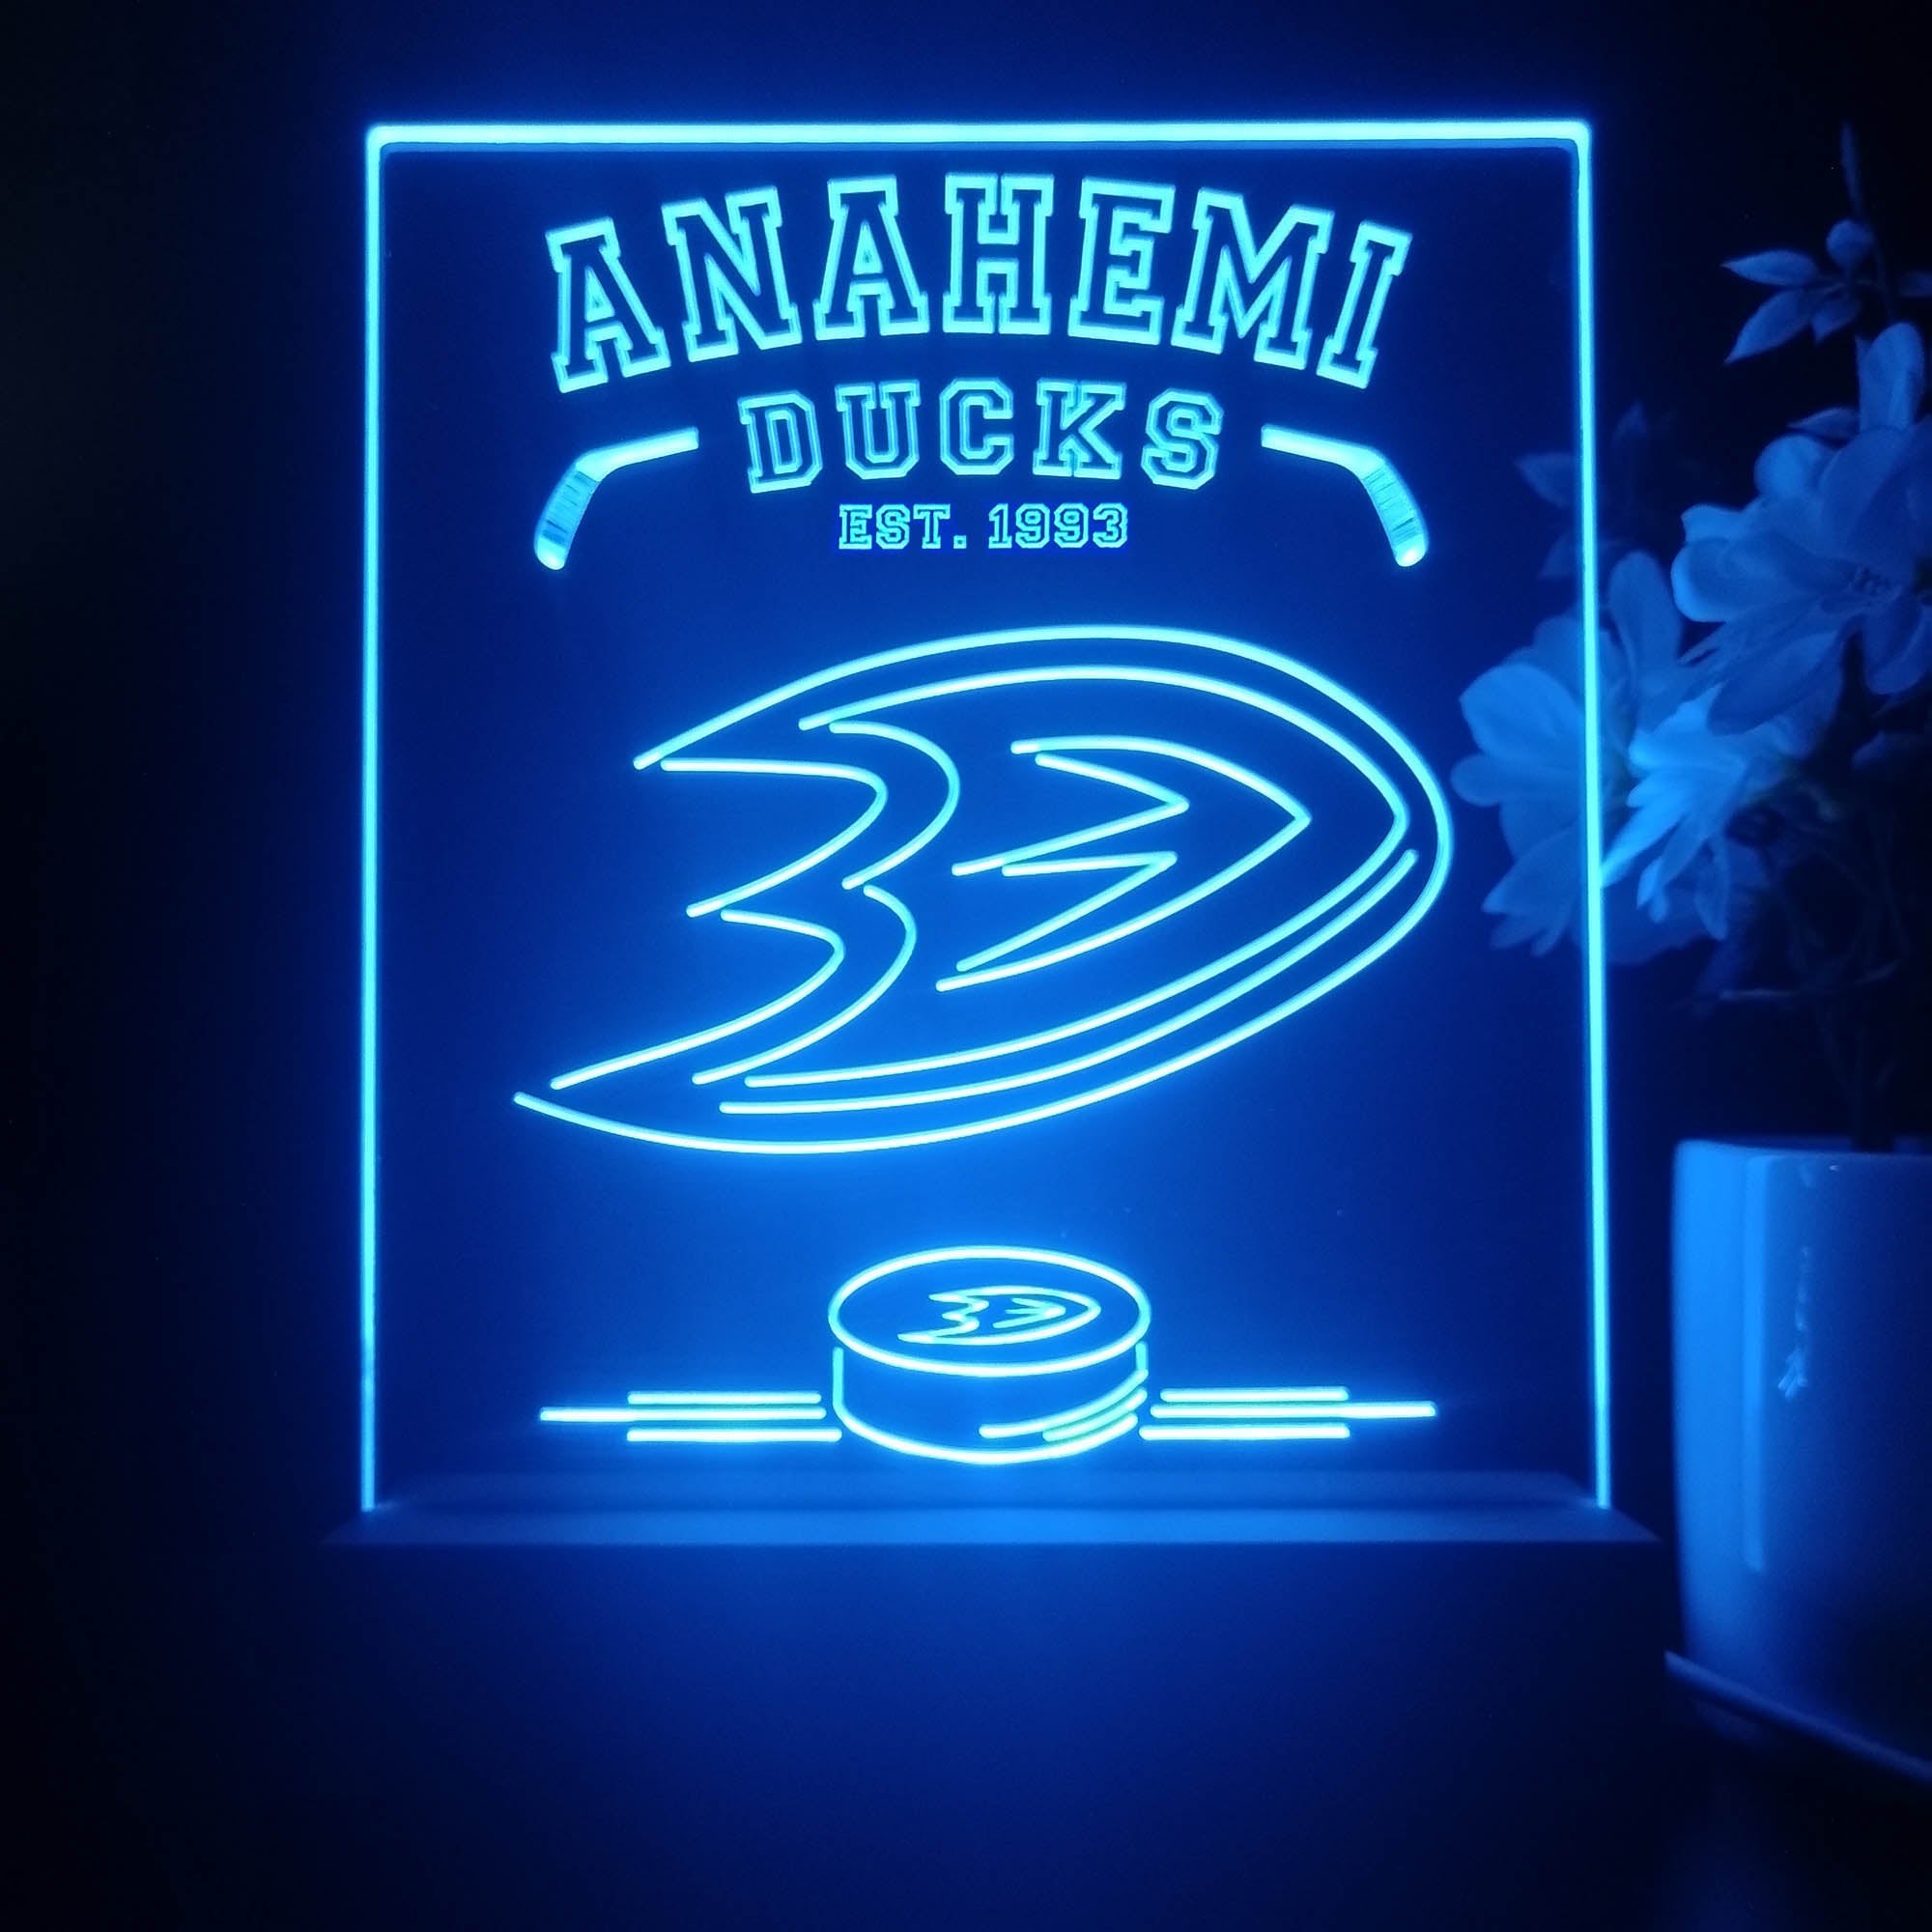 Personalized Anahemi Ducks Souvenir Neon LED Night Light Sign